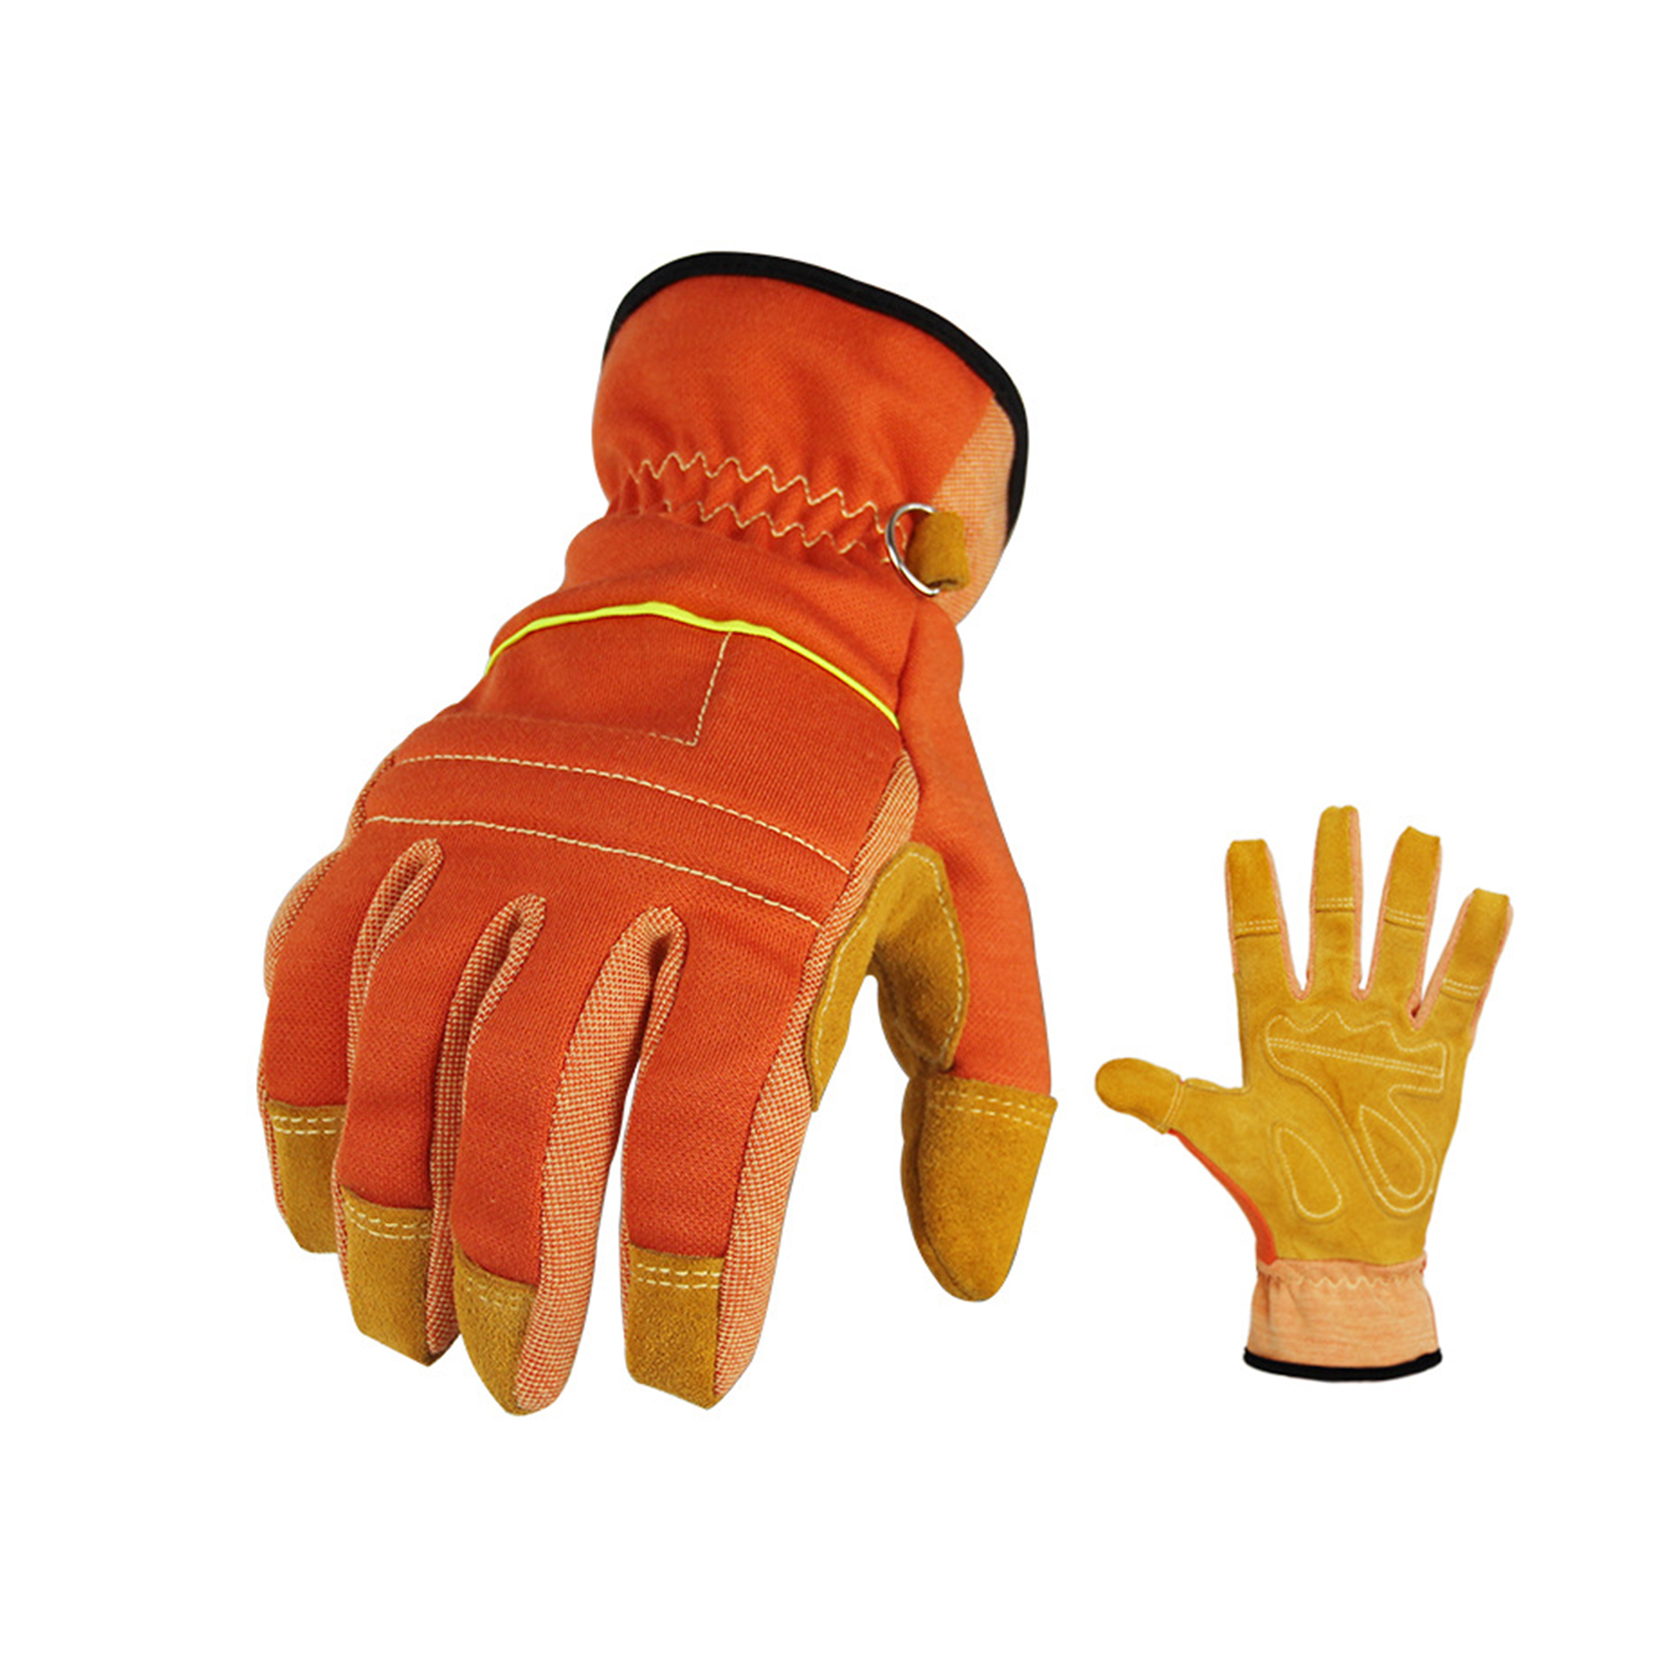 General Utilitas Operis Gloves, Men Women Leather Gardening Welding Gloves